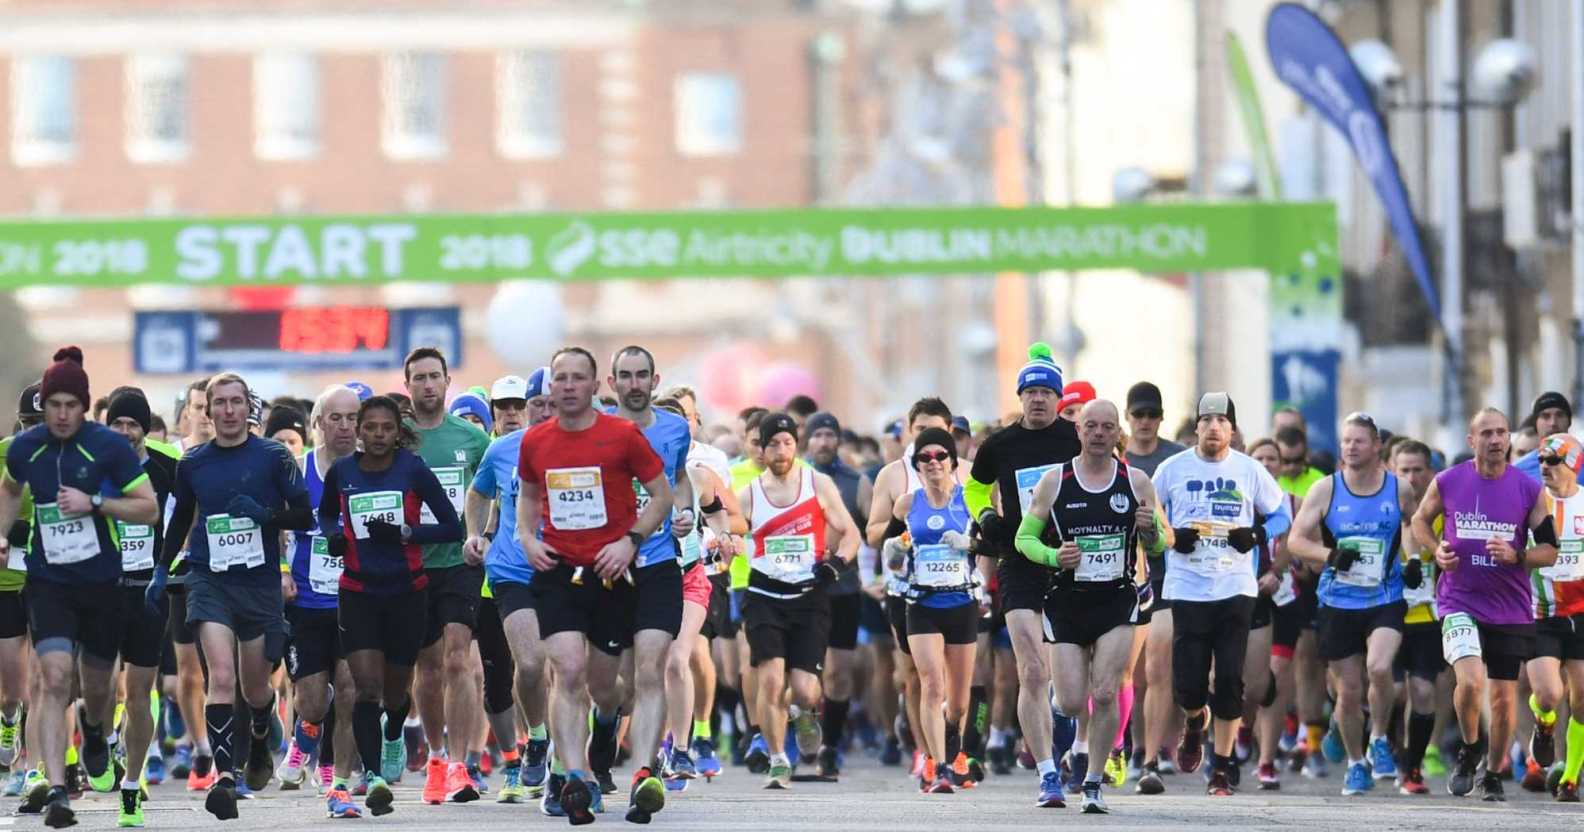 Hundreds of people at the start line of Dublin Marathon